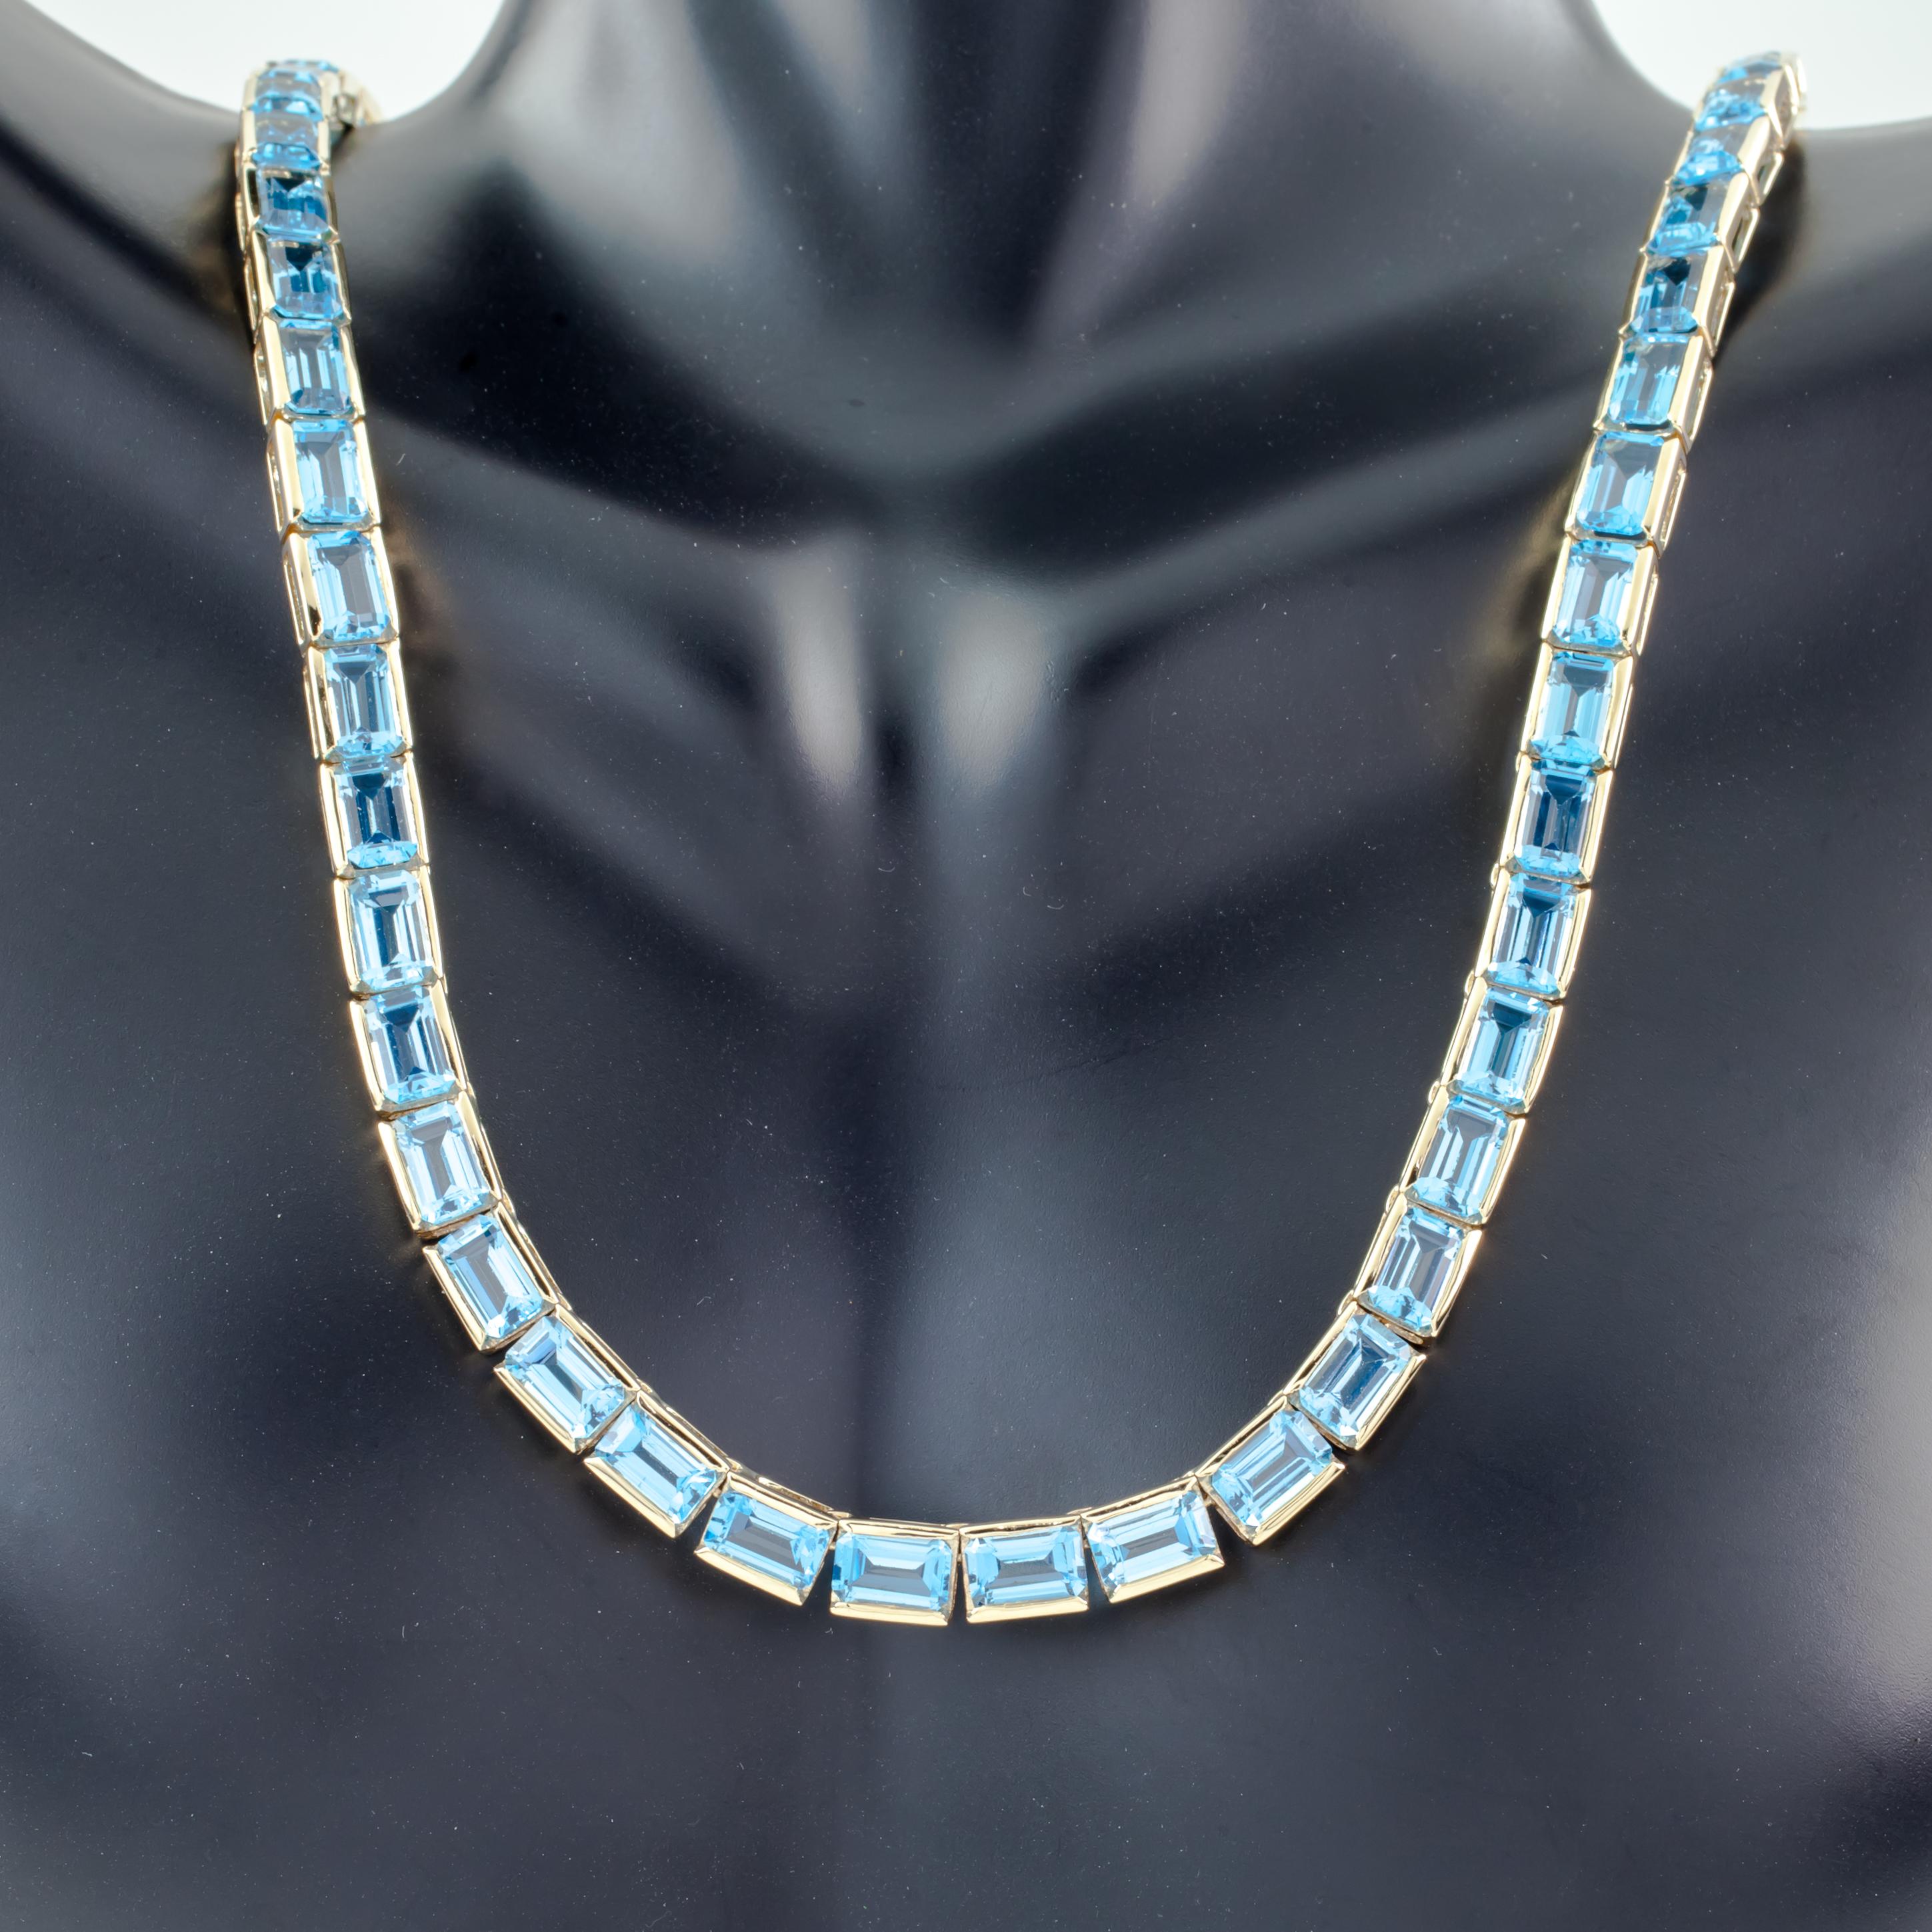 Beautiful Blue Topaz Tennis Necklace
64 0.50 carat Blue Topaz Stones Set in 14k Yellow Gold.
Total Carat Weight: 32.00 carats
Total Length = 16